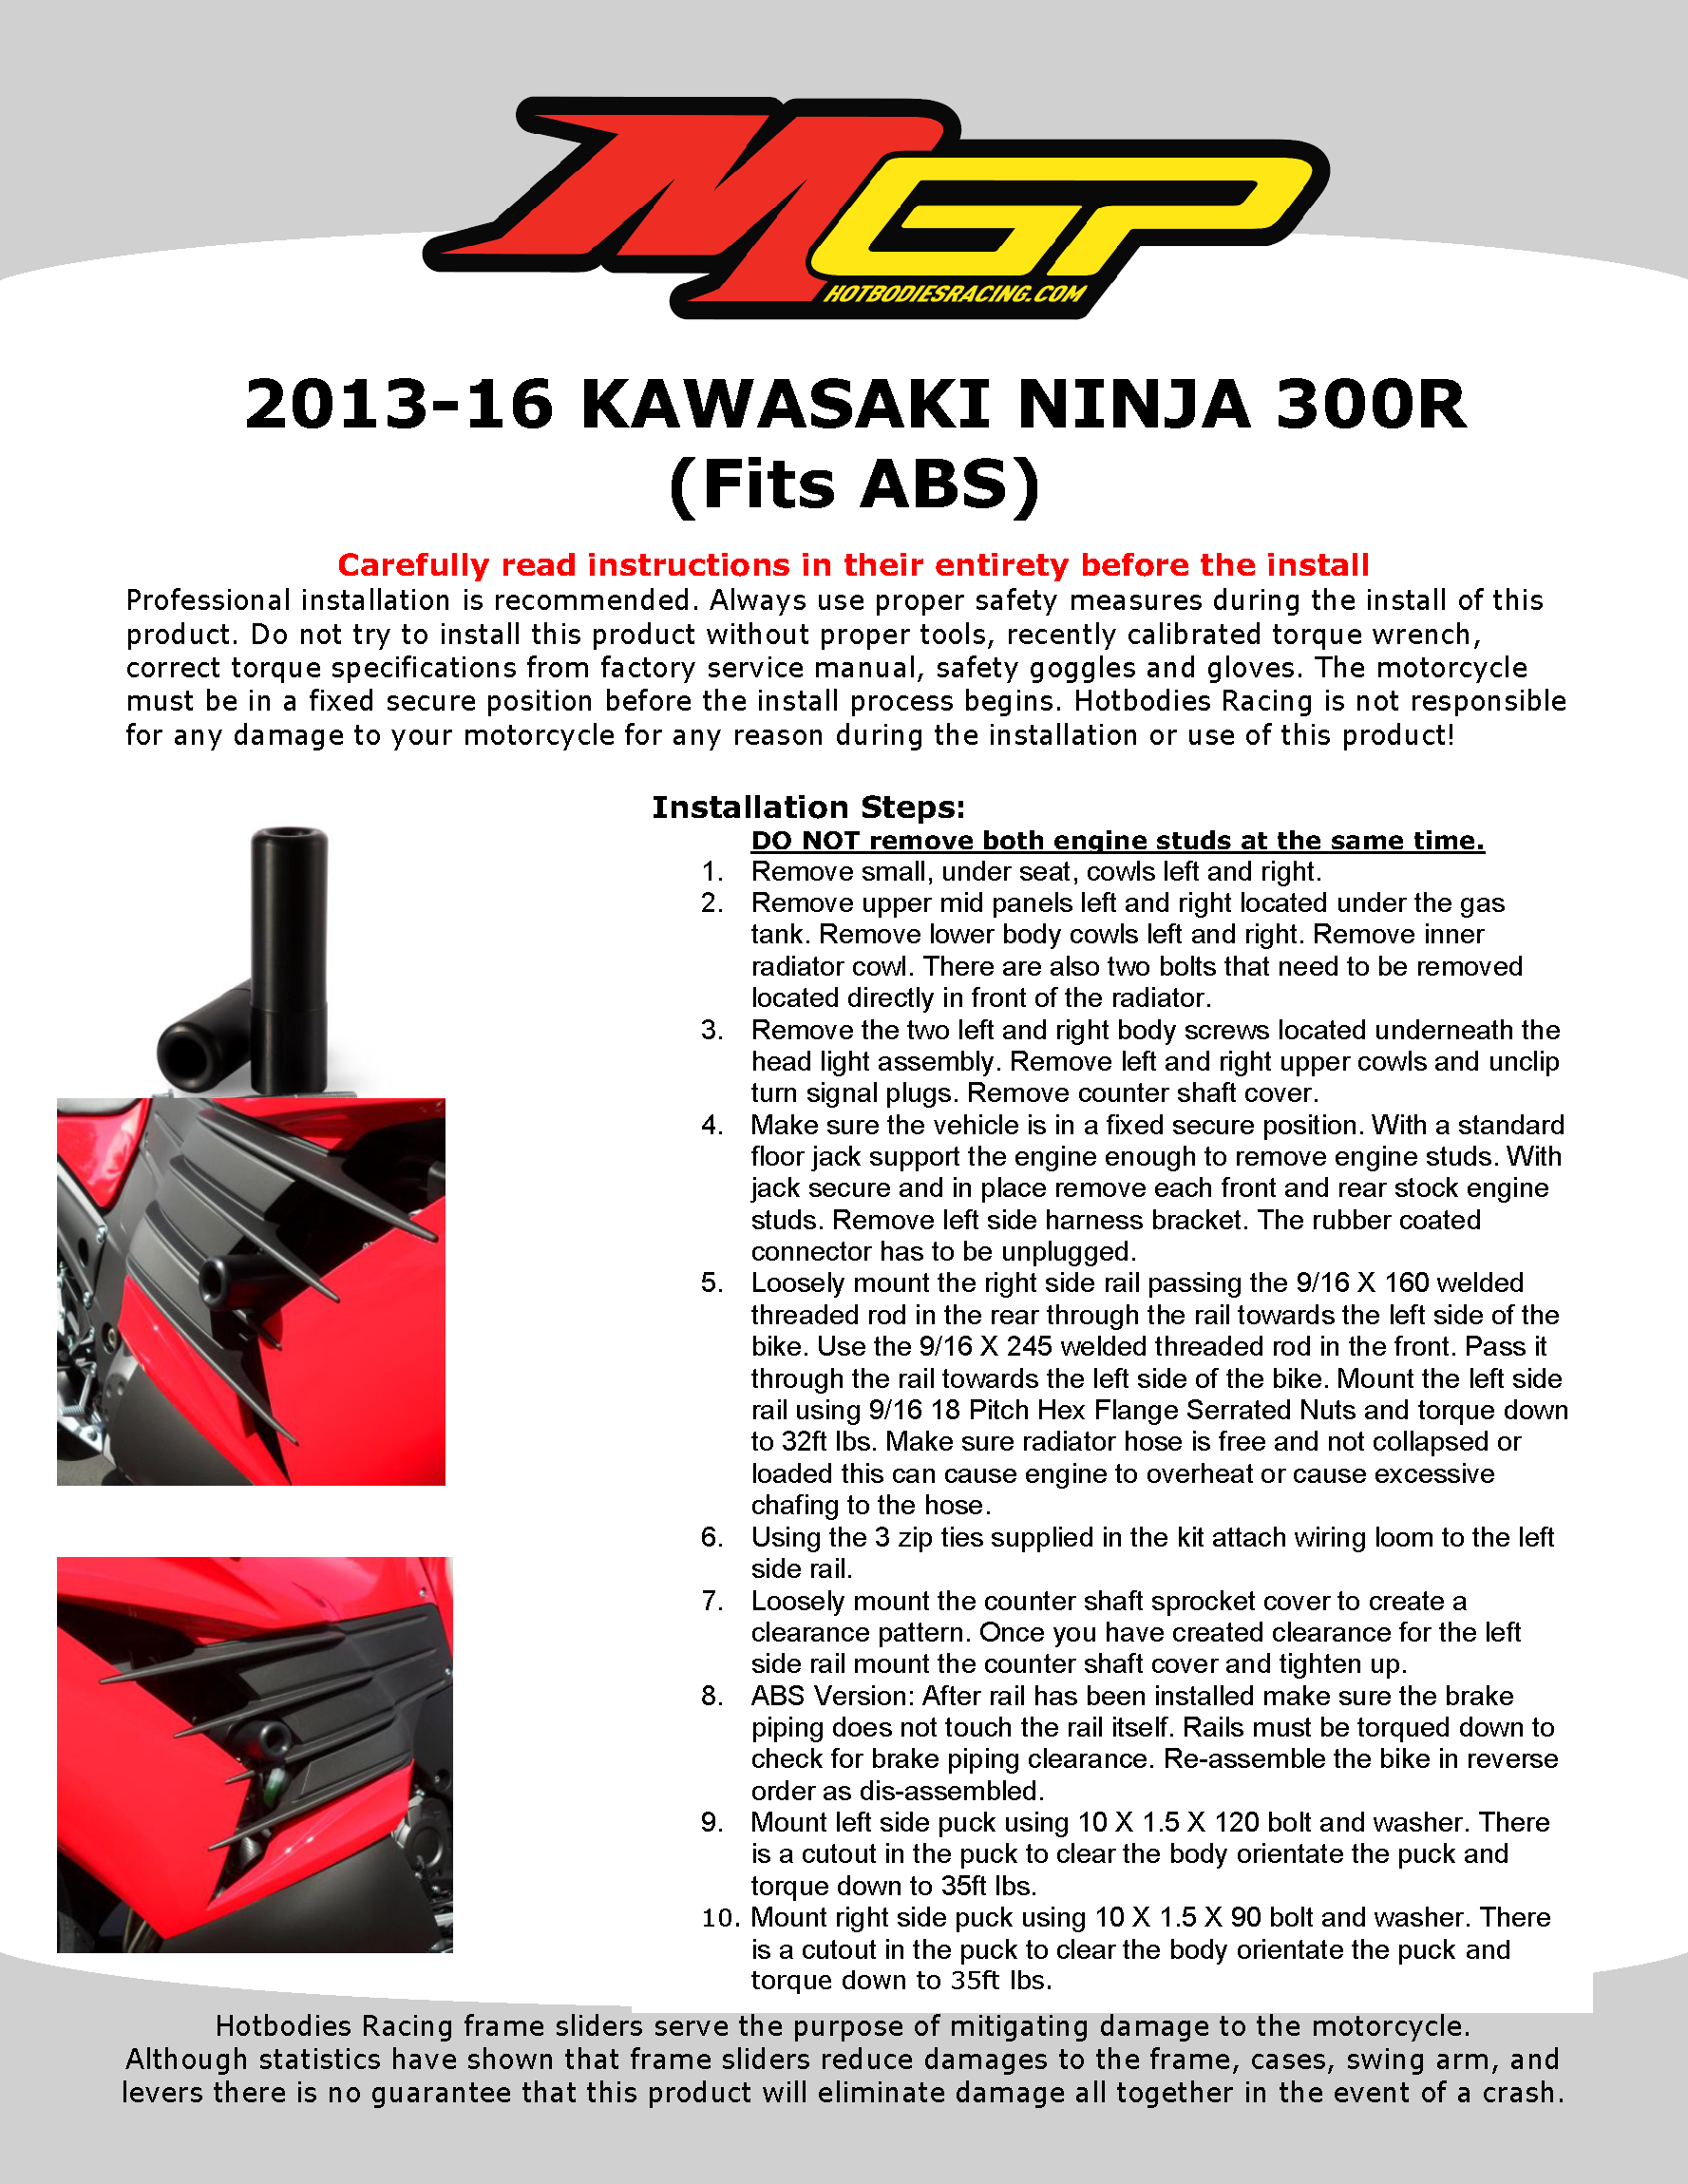 

2013-16 KAWASAKI NINJA 300R

